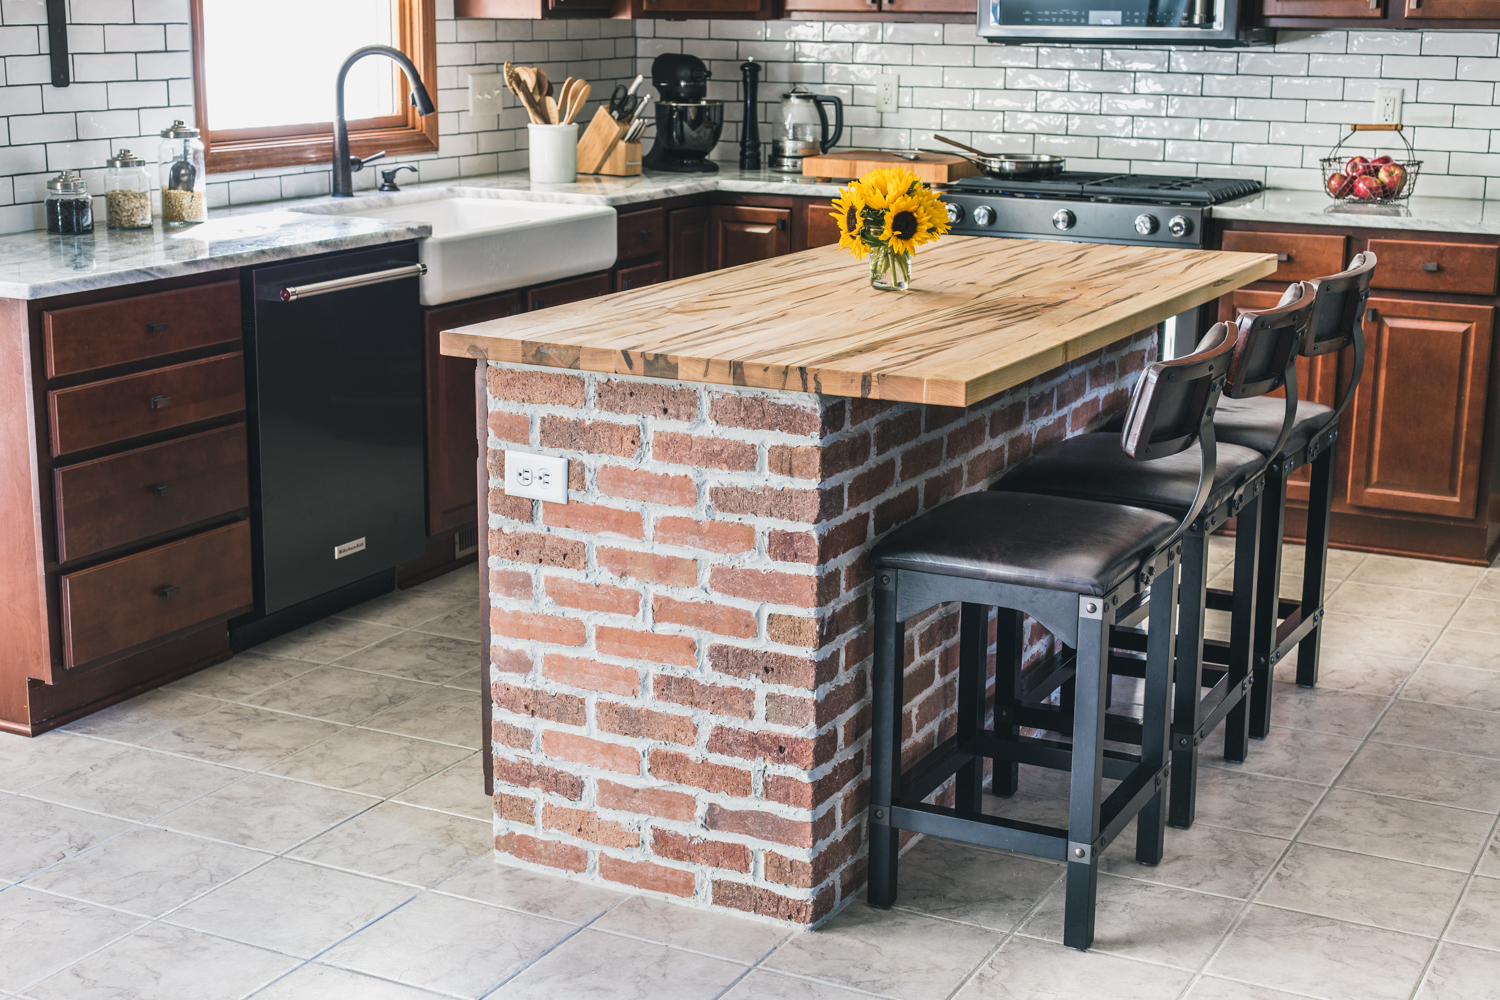 Kitchen With Brick Wall Design